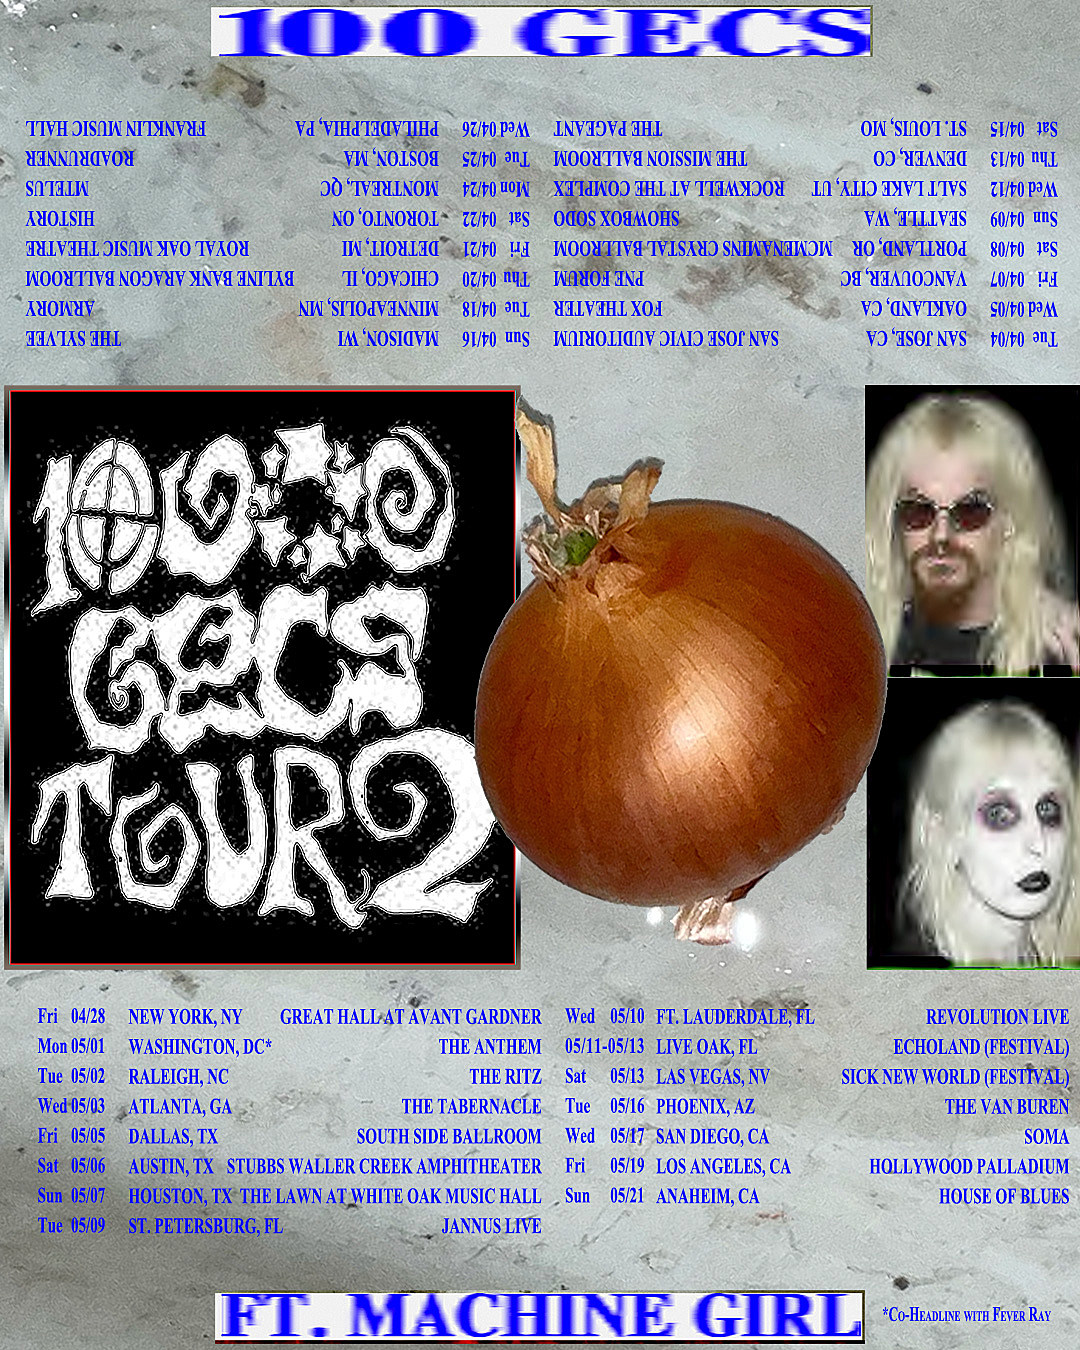 100 gecs tour dates